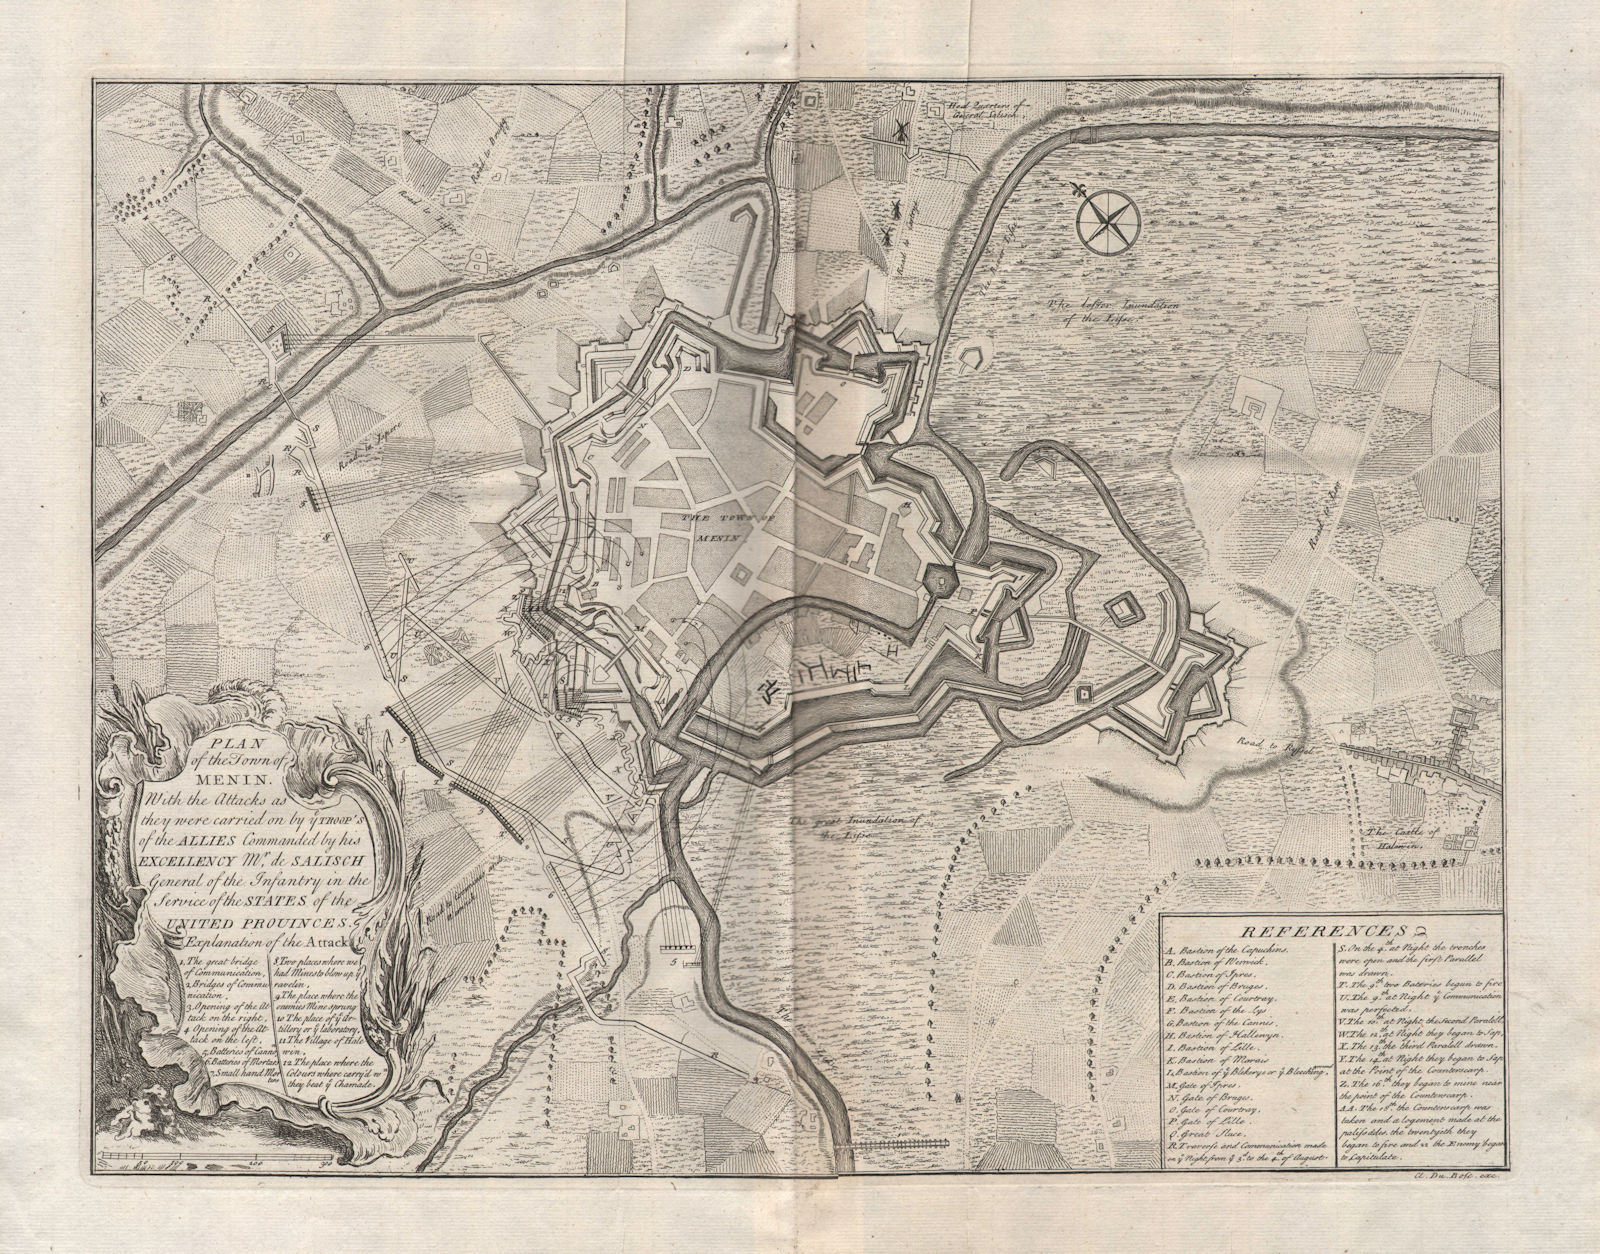 Associate Product "Plan of the town of Menin". Siege of Menen, Belgium 1706. DU BOSC 1737 map